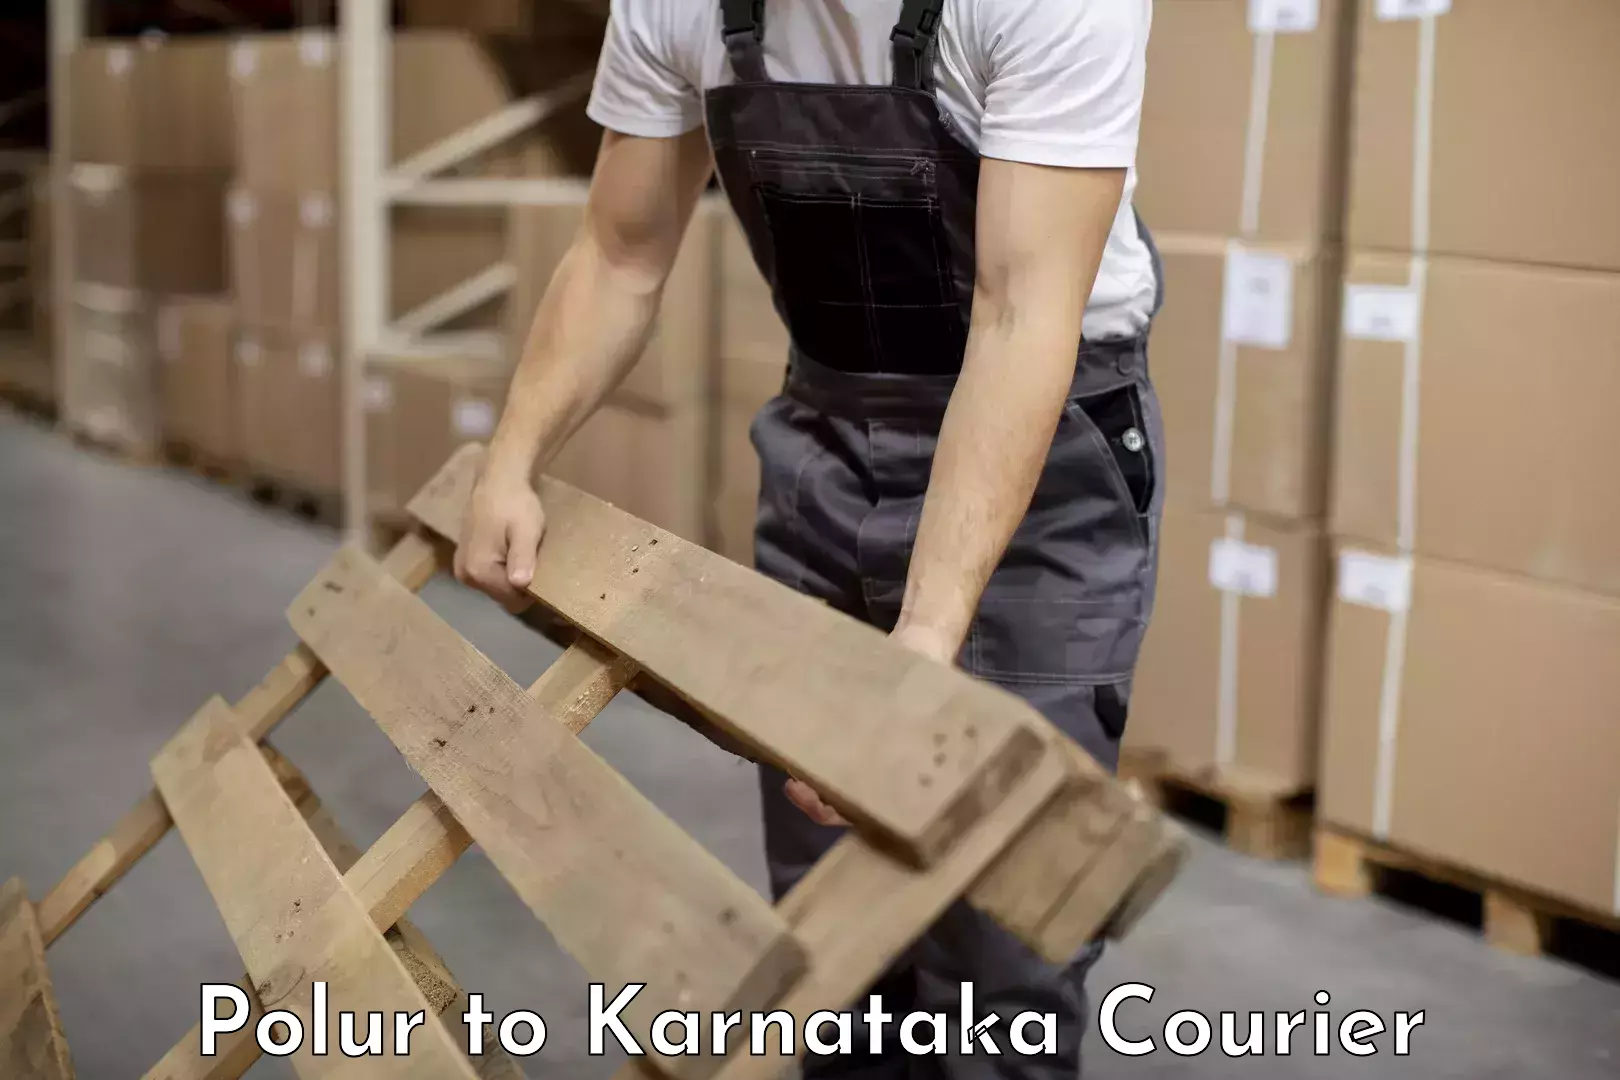 Professional movers and packers Polur to Karnataka